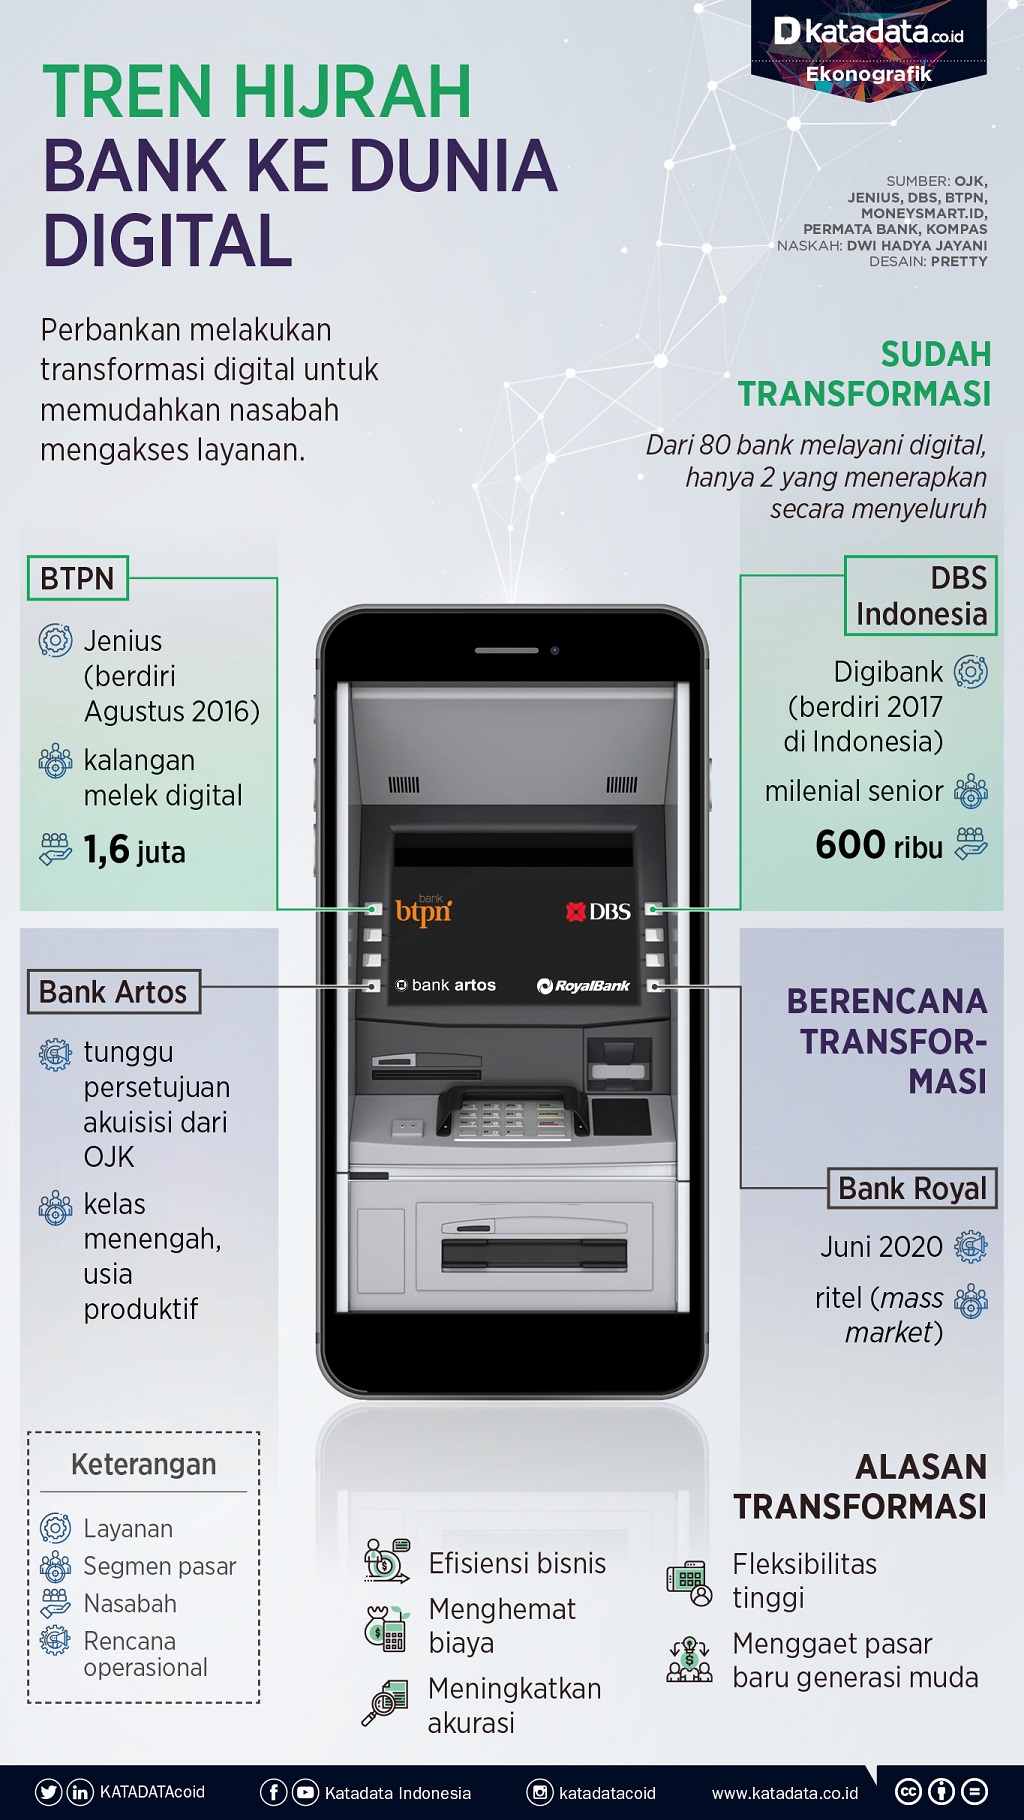 bank digital